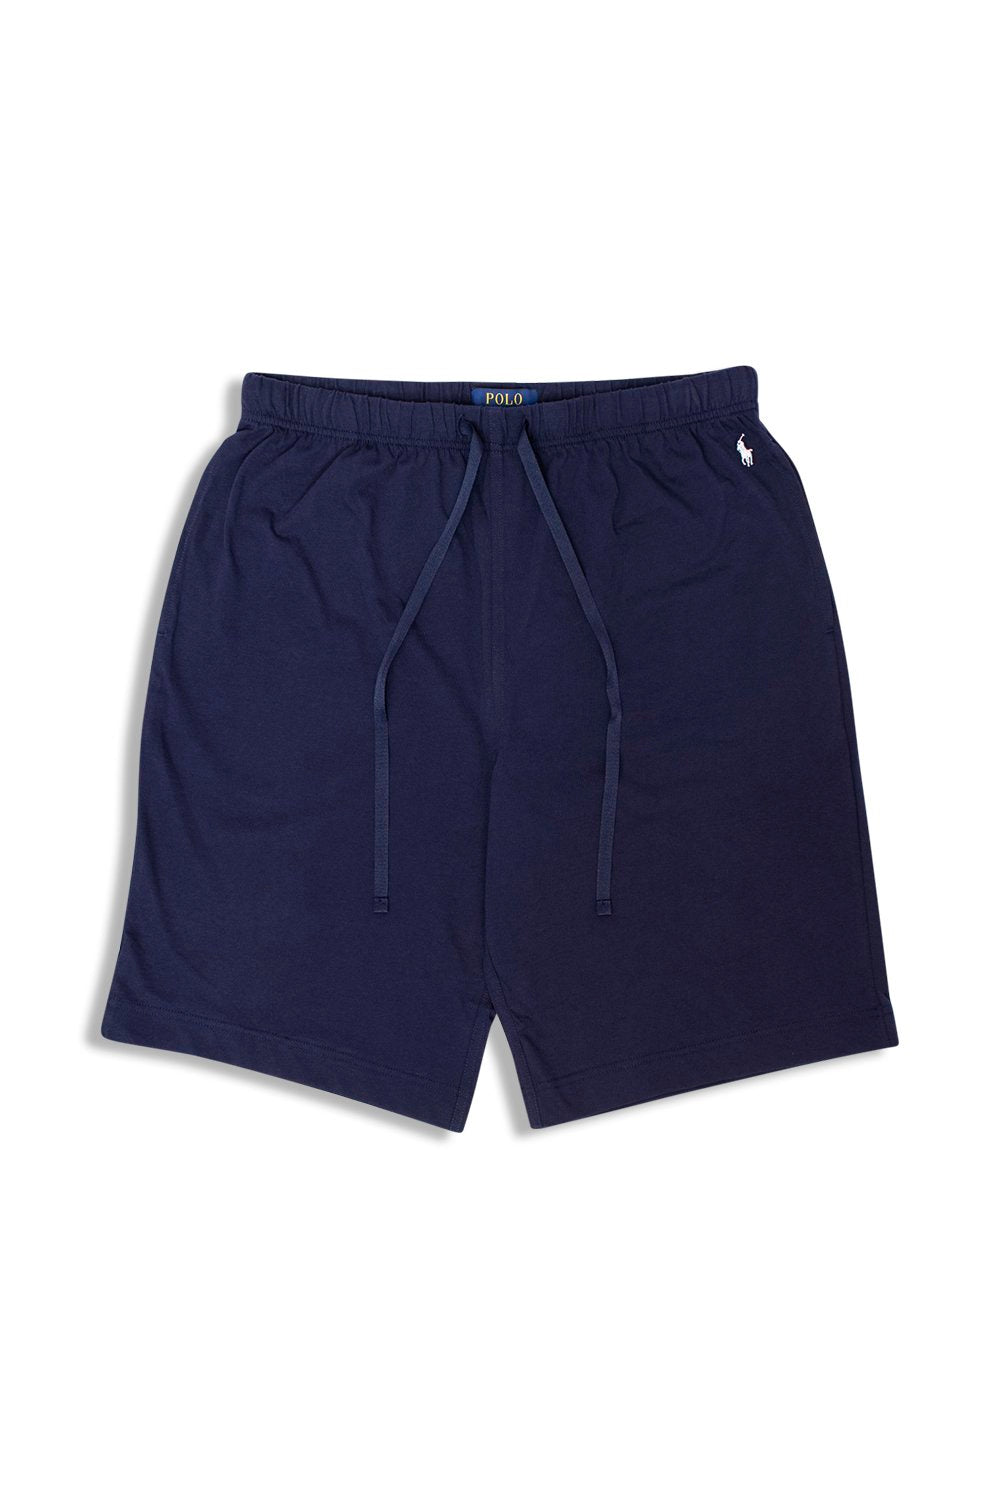 Men's Navy Ralph Lauren Lounge Jersey Shorts